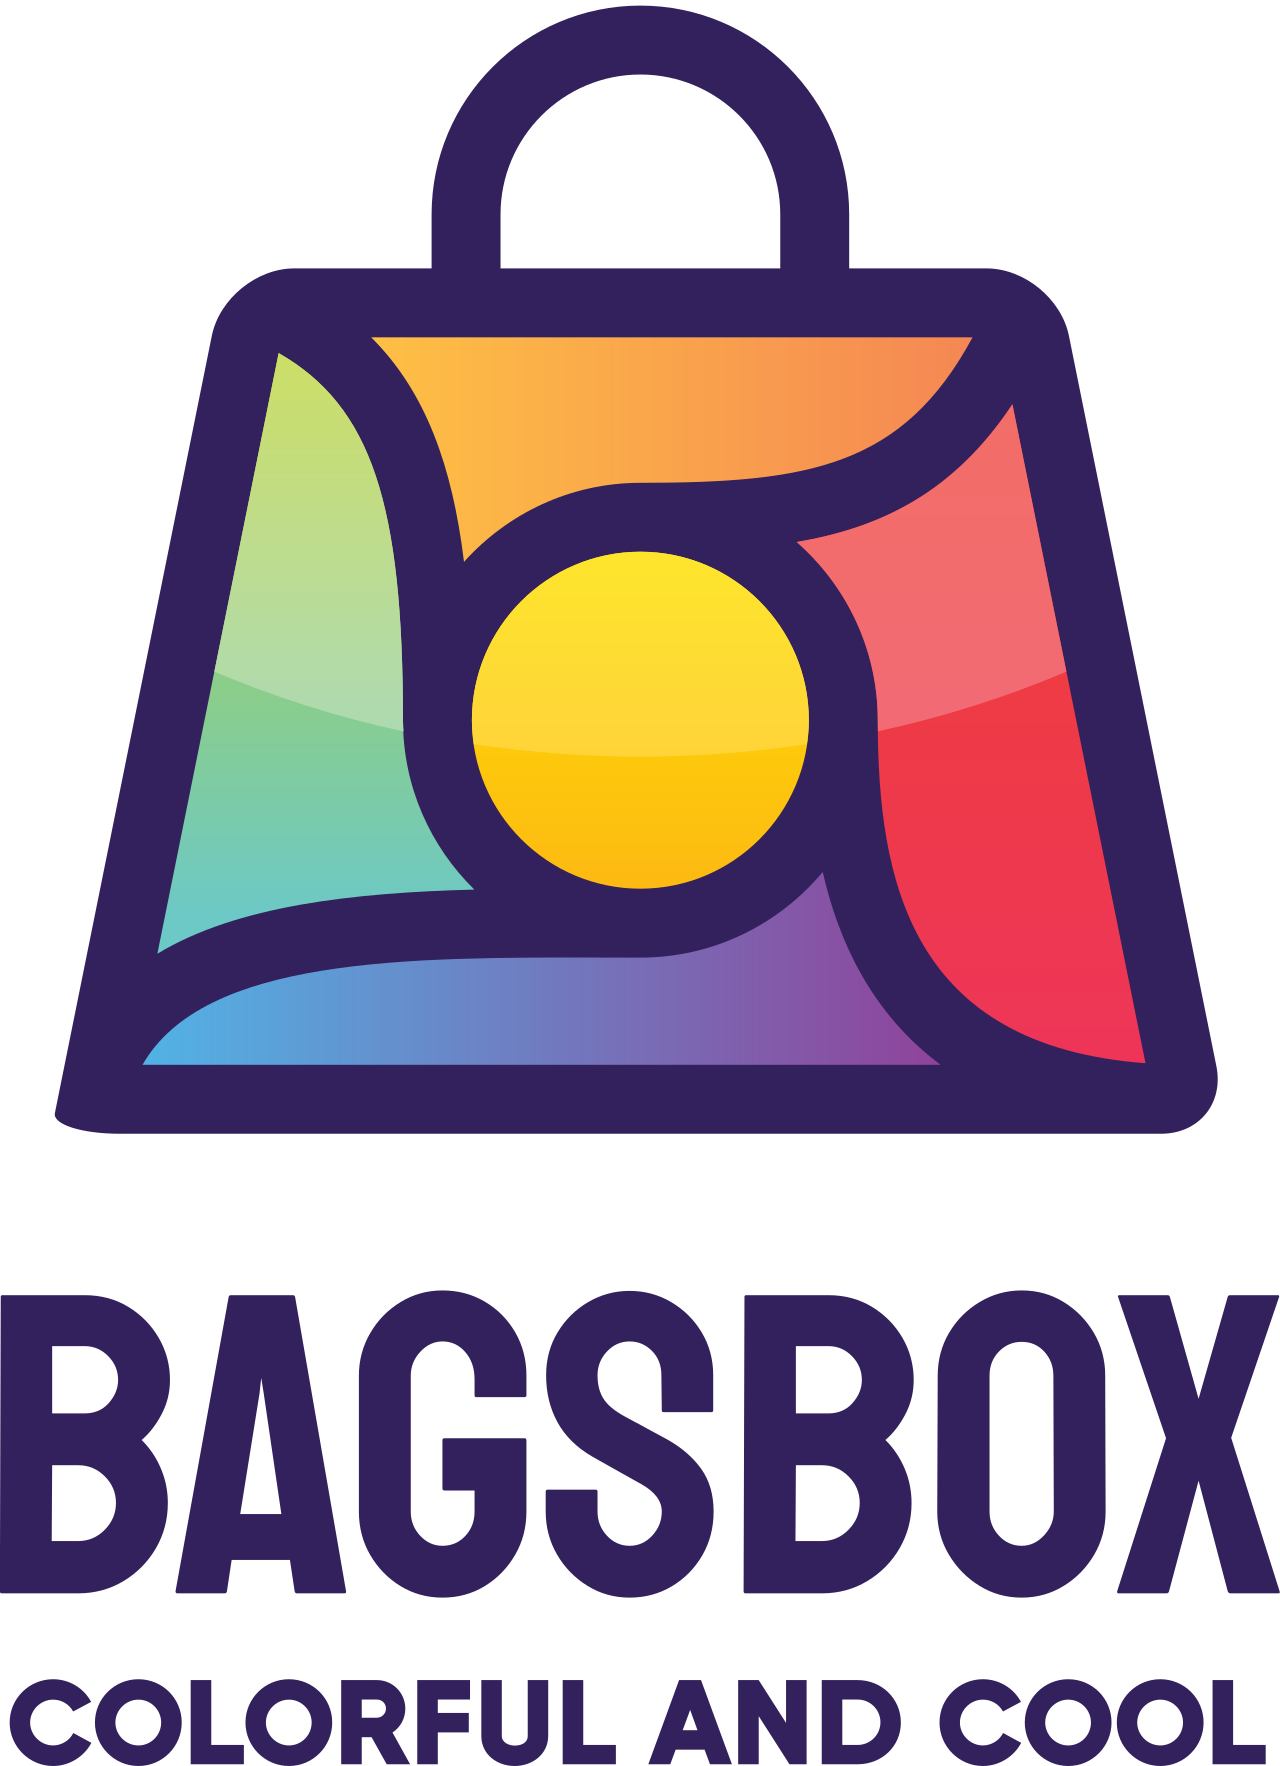 Bagsbox's logo